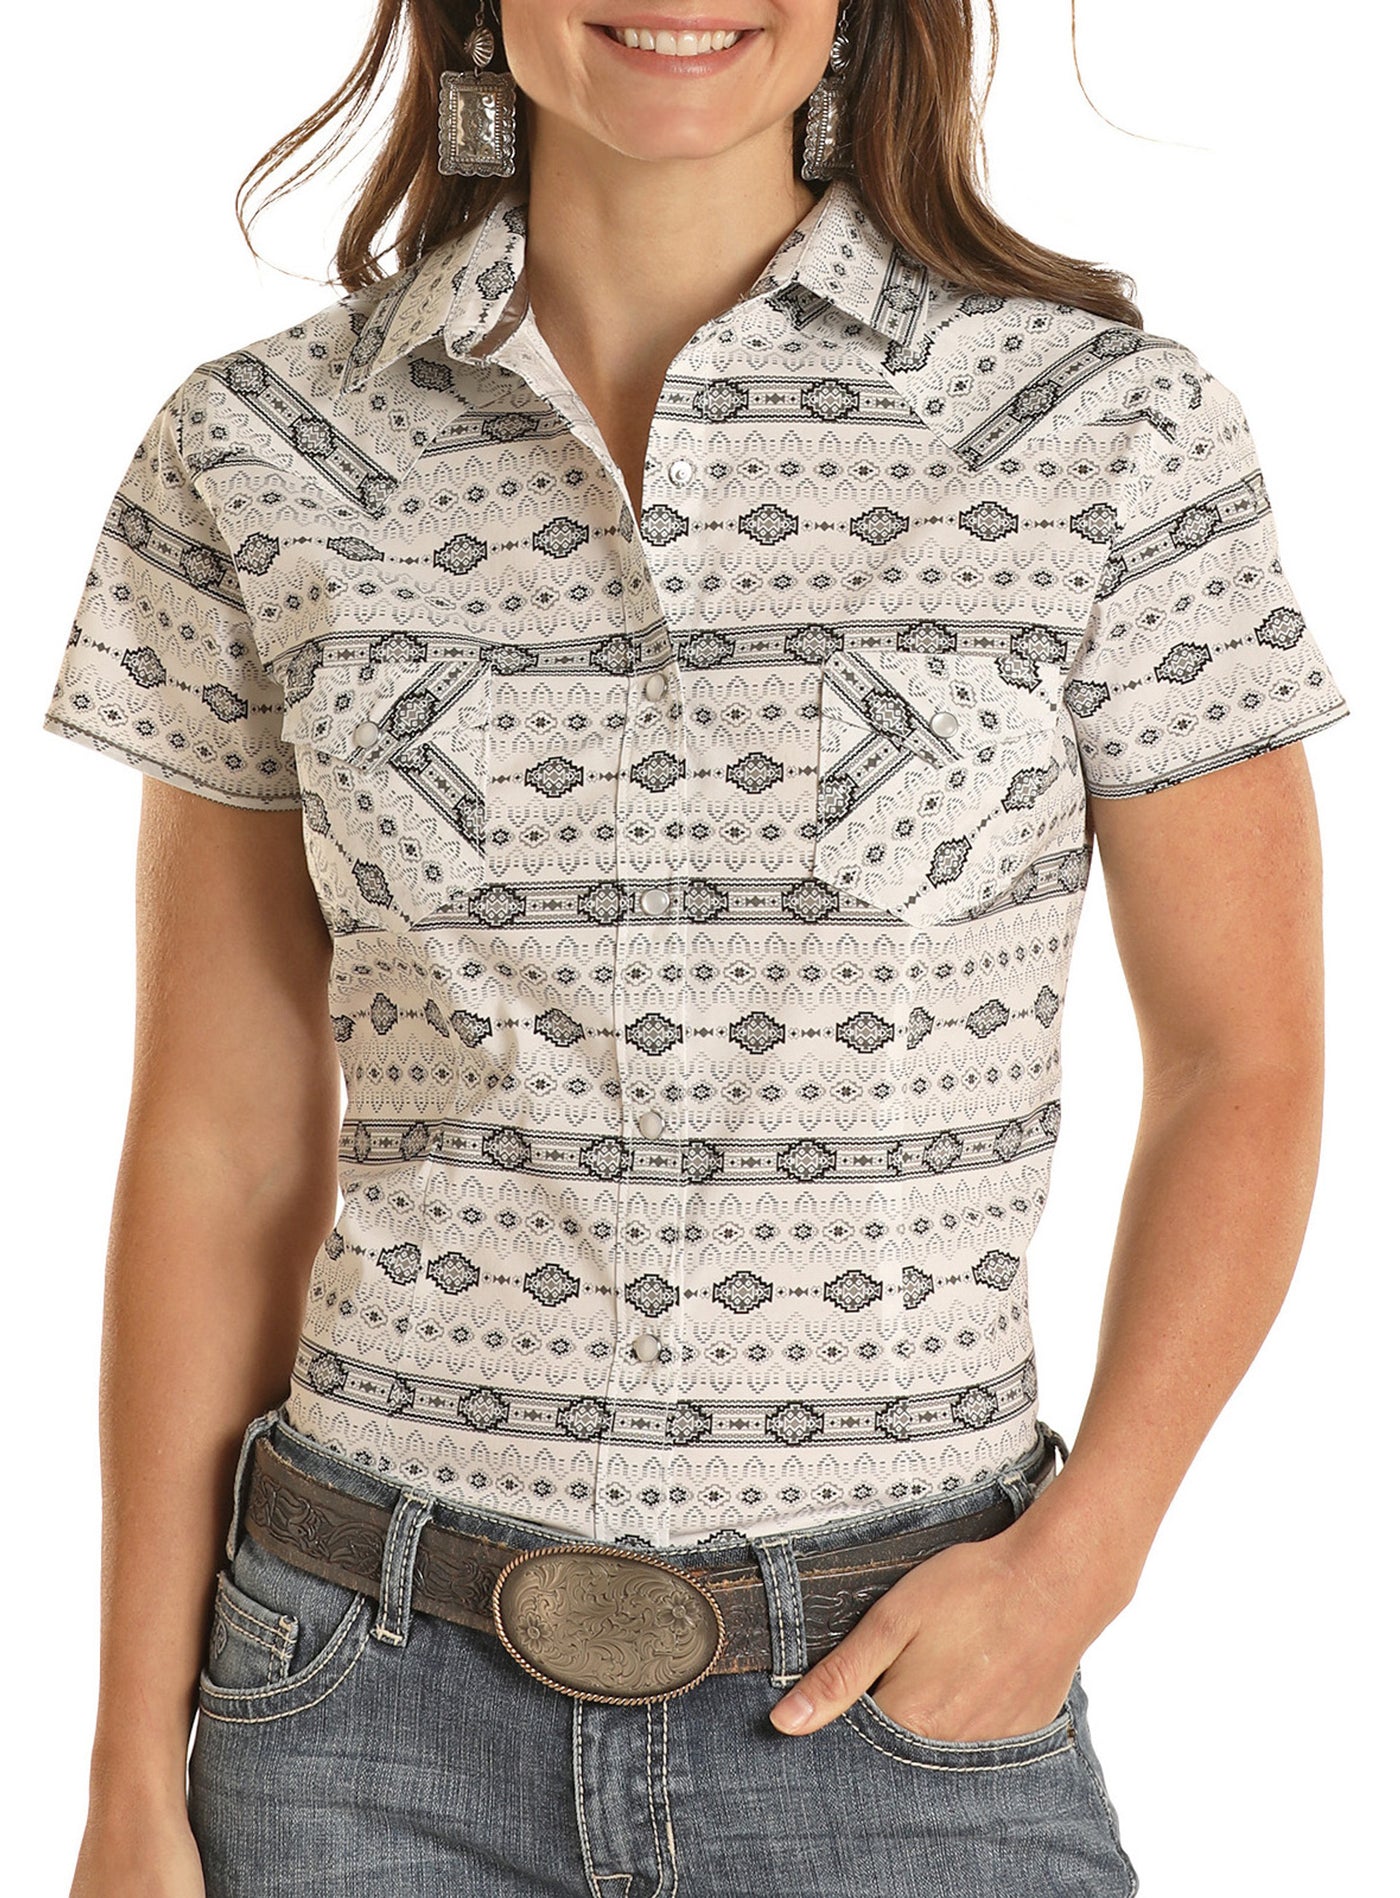 Panhandle Rough Stock Women's Ombre Aztec Print Short Sleeve Snap Shirt